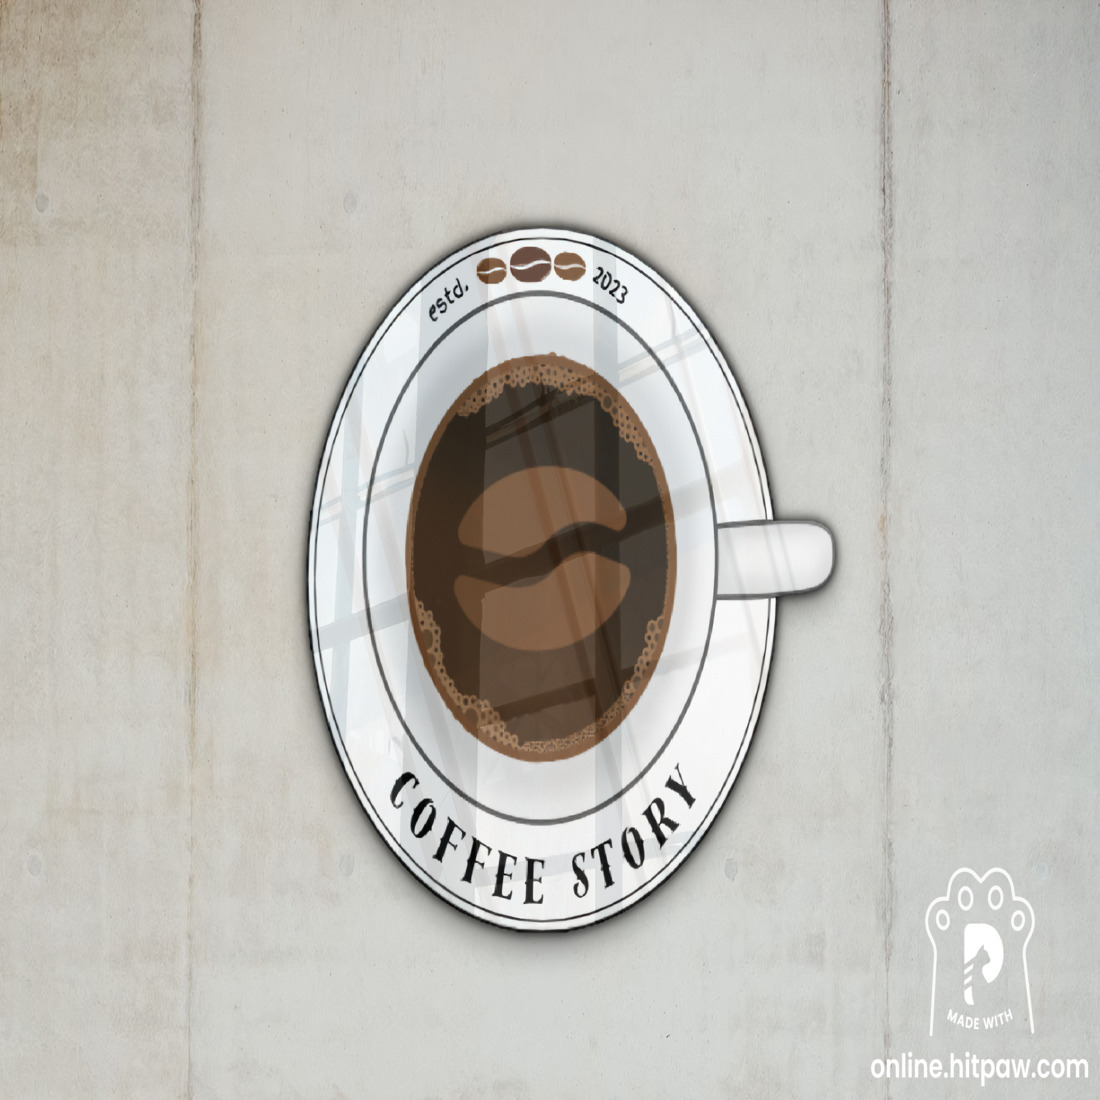 Logo coffee, distinctive coffee cover image.